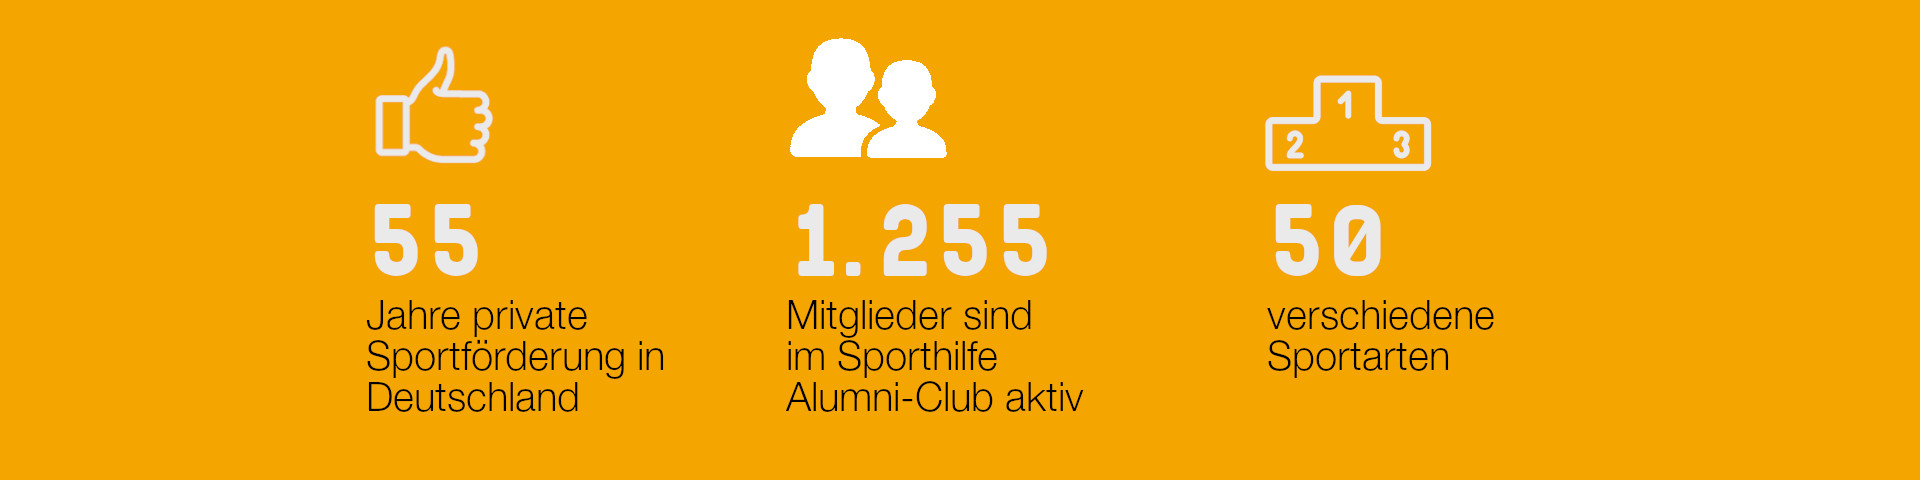 Sporthilfe Alumni-Club in Zahlen